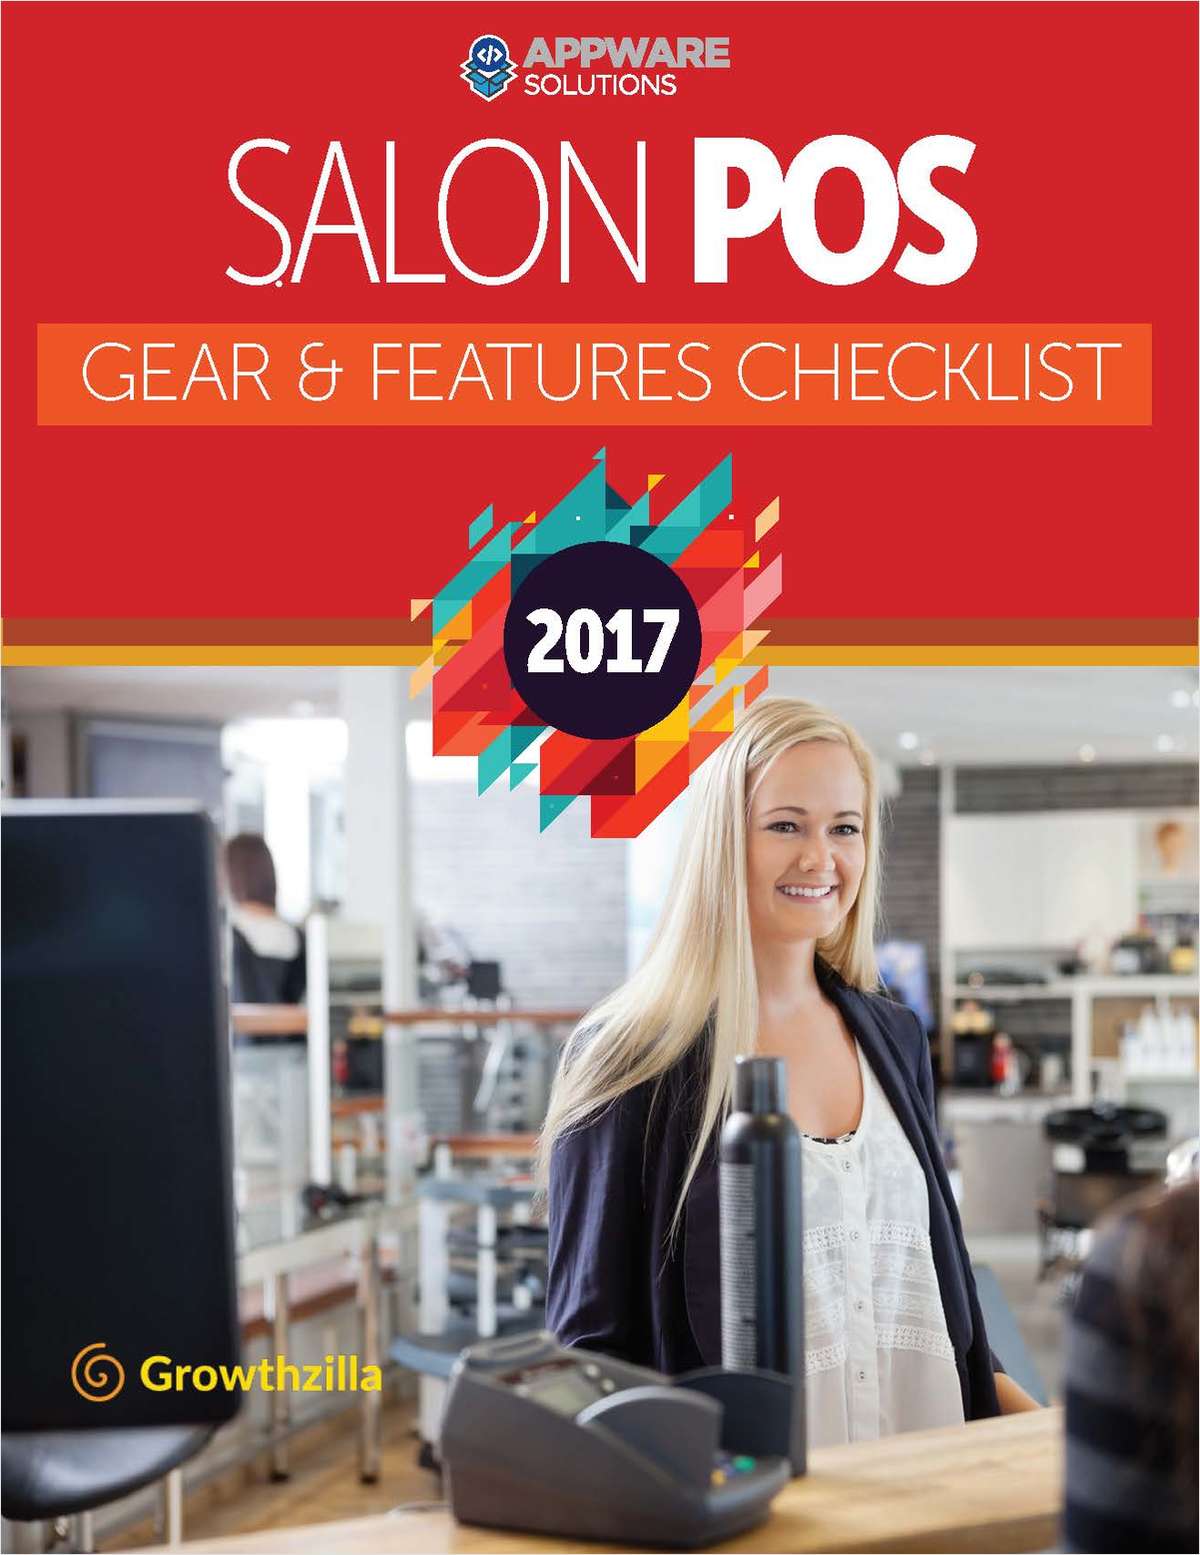 Salon Point of Sale Gear & Features Checklist